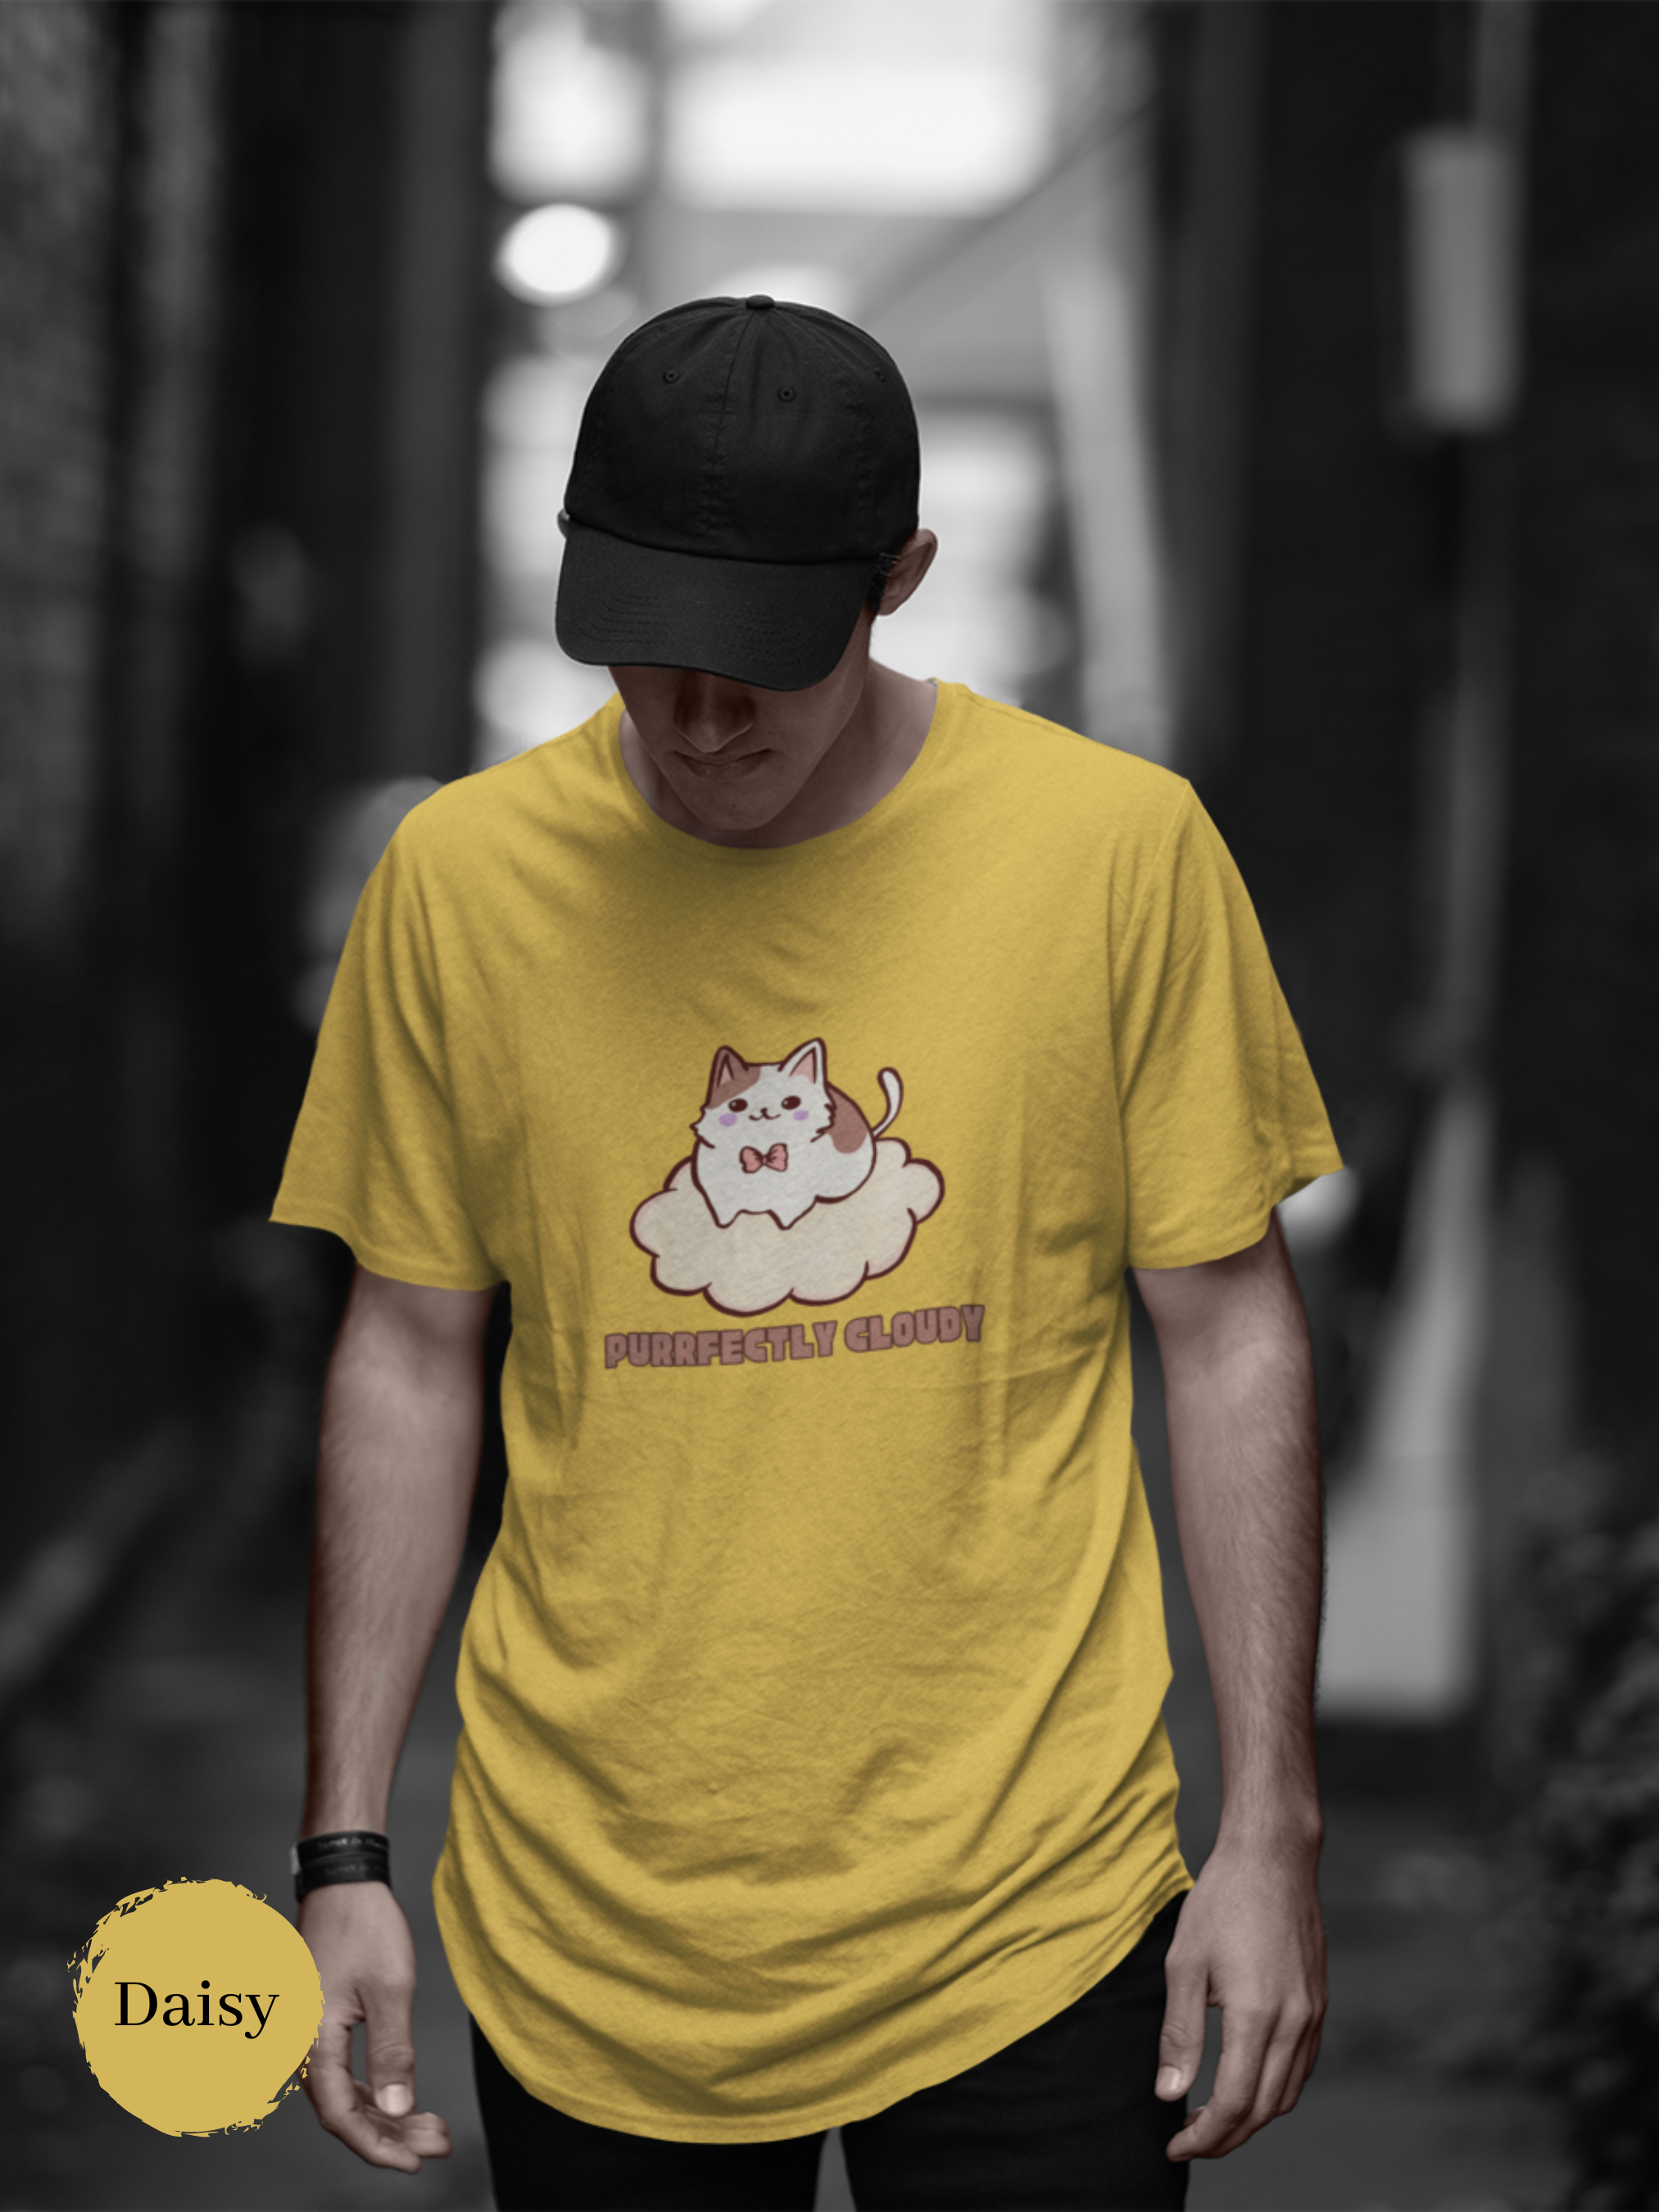 Cat T-shirt: Purrfectly Cloudy - Cute Chubby Cat on Cloud - Japanese-inspired Cat Art Shirt